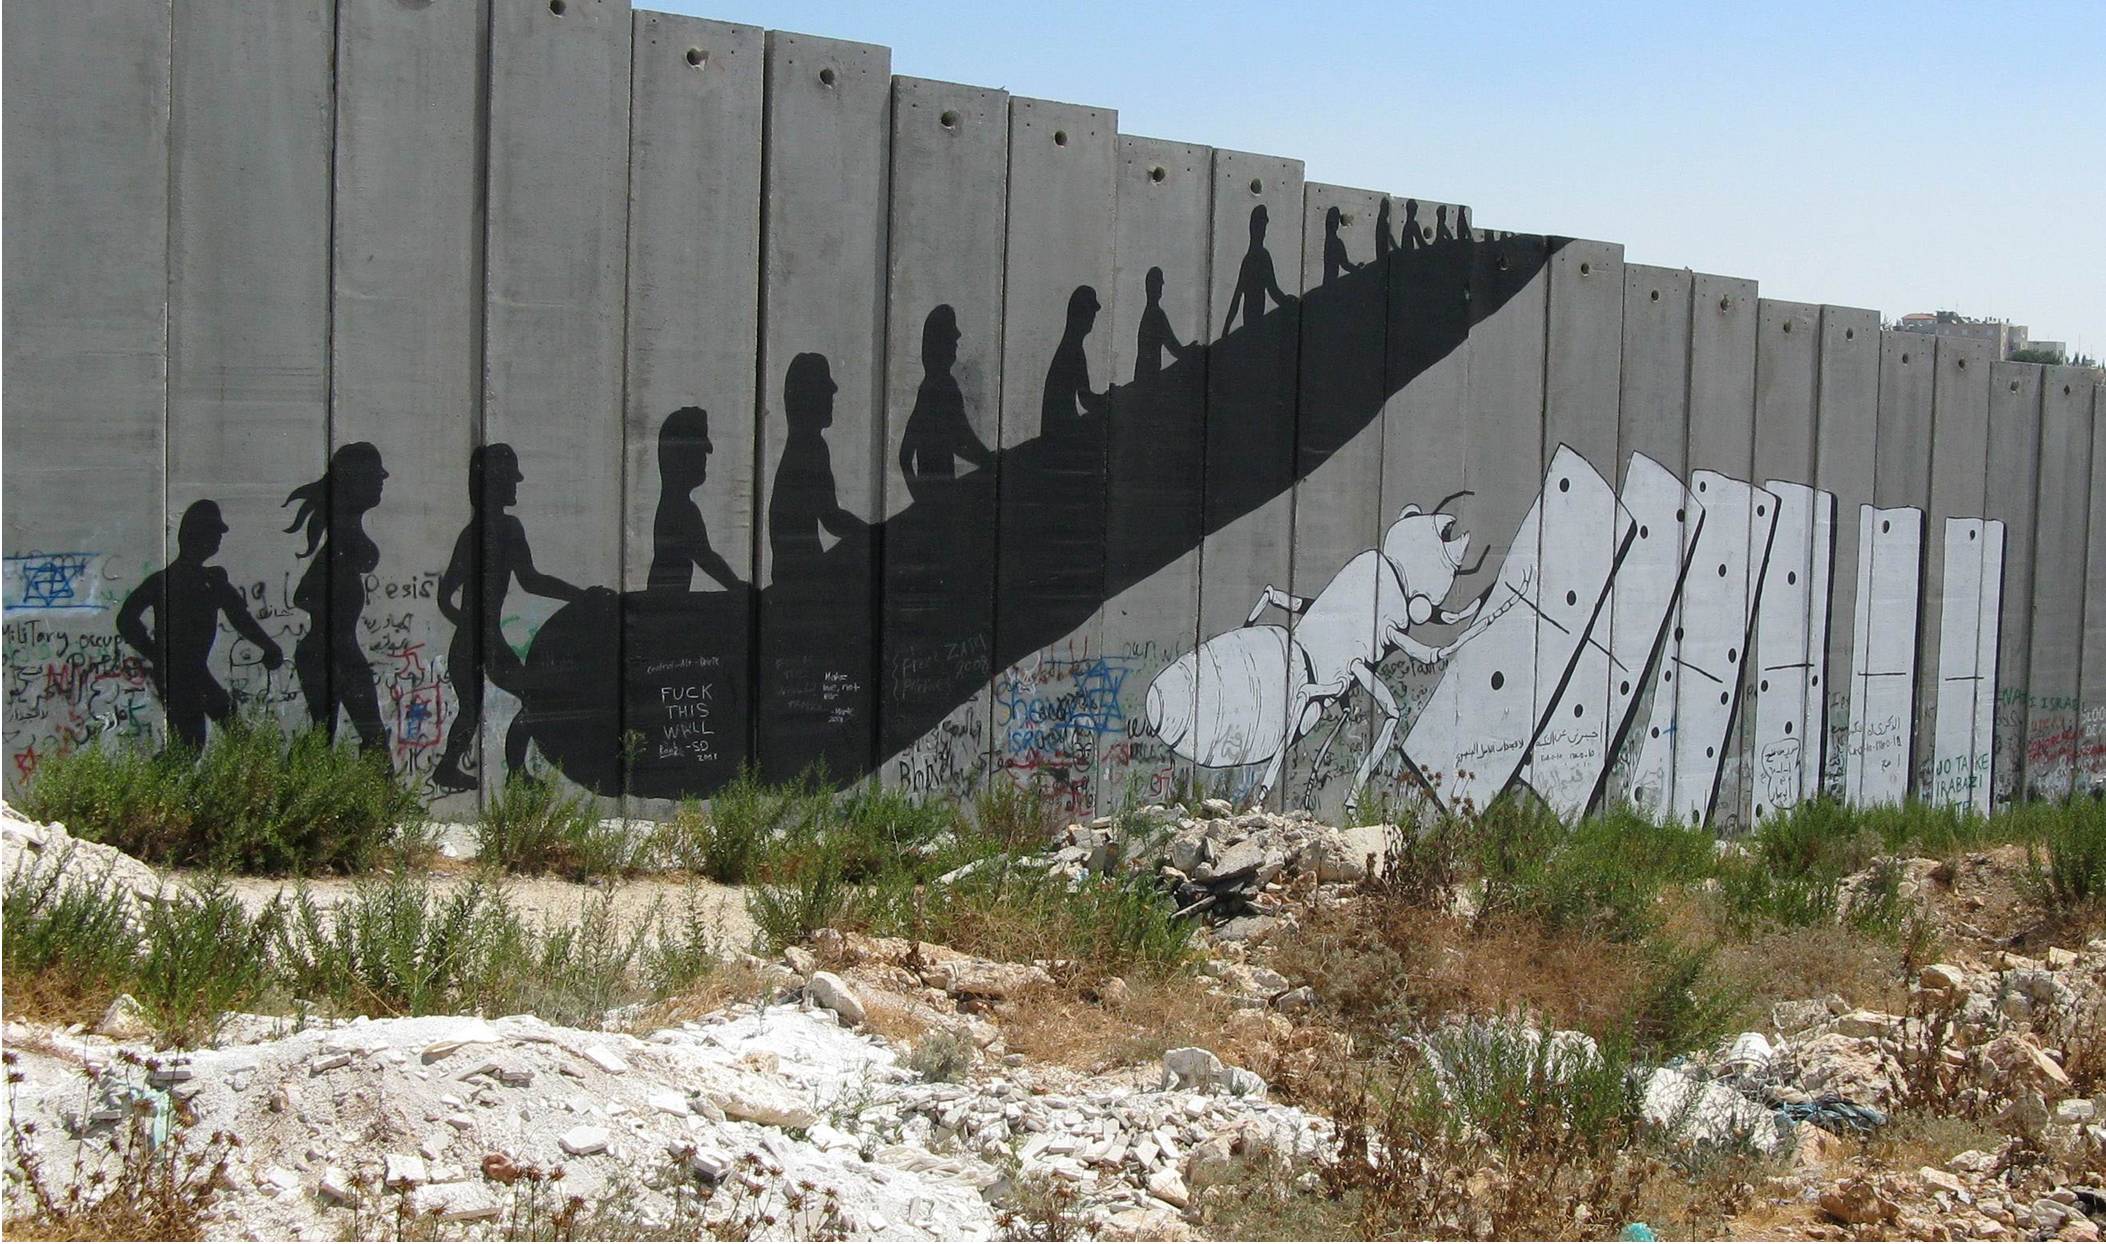 battleface - Painting politics in Gaza